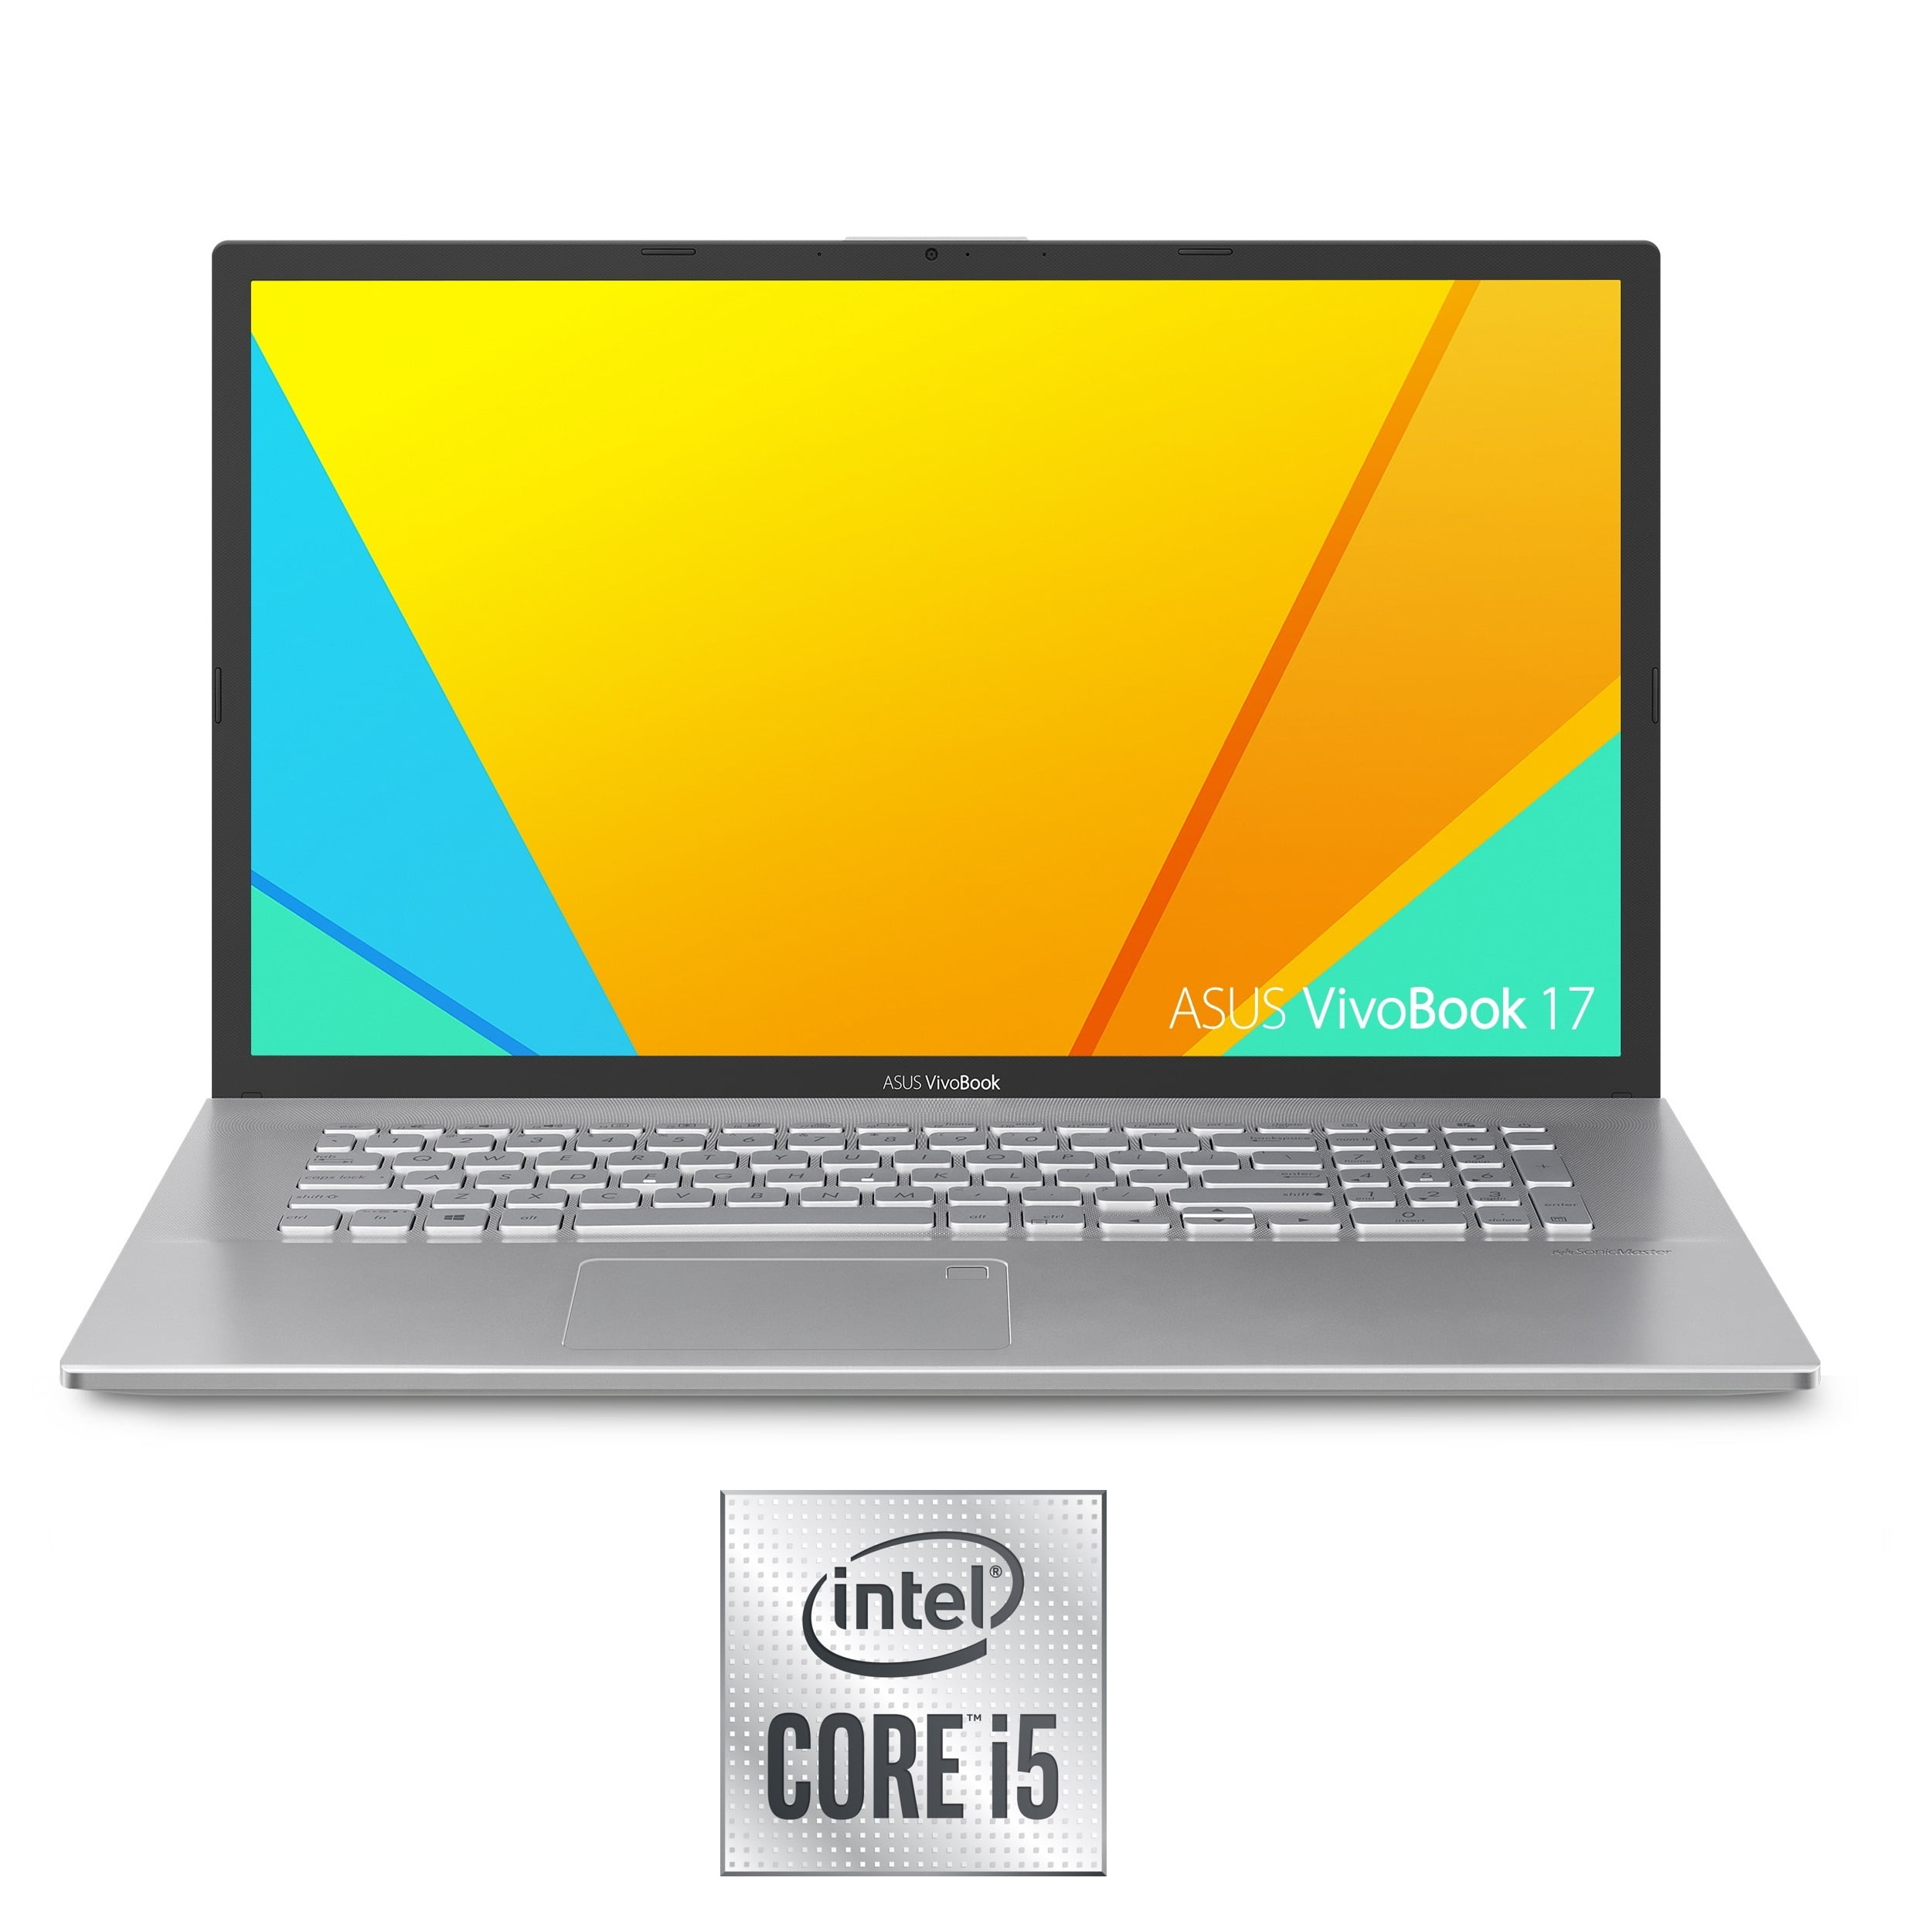 Advent vej Leia ASUS VivoBook 17.3" i5 8GB/1TB + 128GB Laptop; 17.3" FHD, Intel Core  i5-1035G1, Intel UHD Graphics, 8GB RAM, 128GB SSD + 1TB HDD, Windows 10  Home, Silver, S712JA-WH54 - Walmart.com